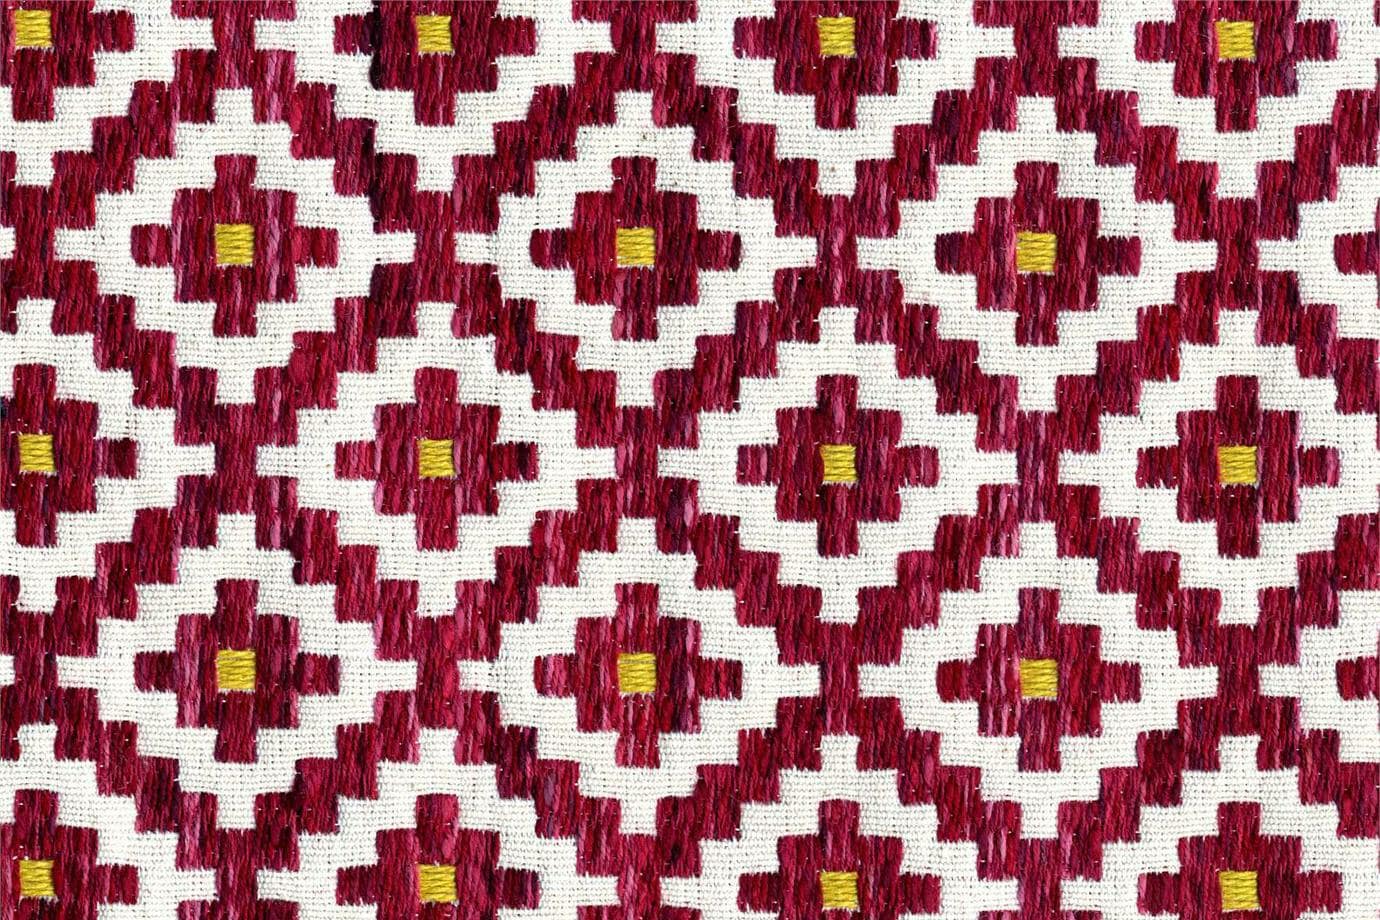 J1951 SECONDIGLIANO 010 Begonia home decoration fabric